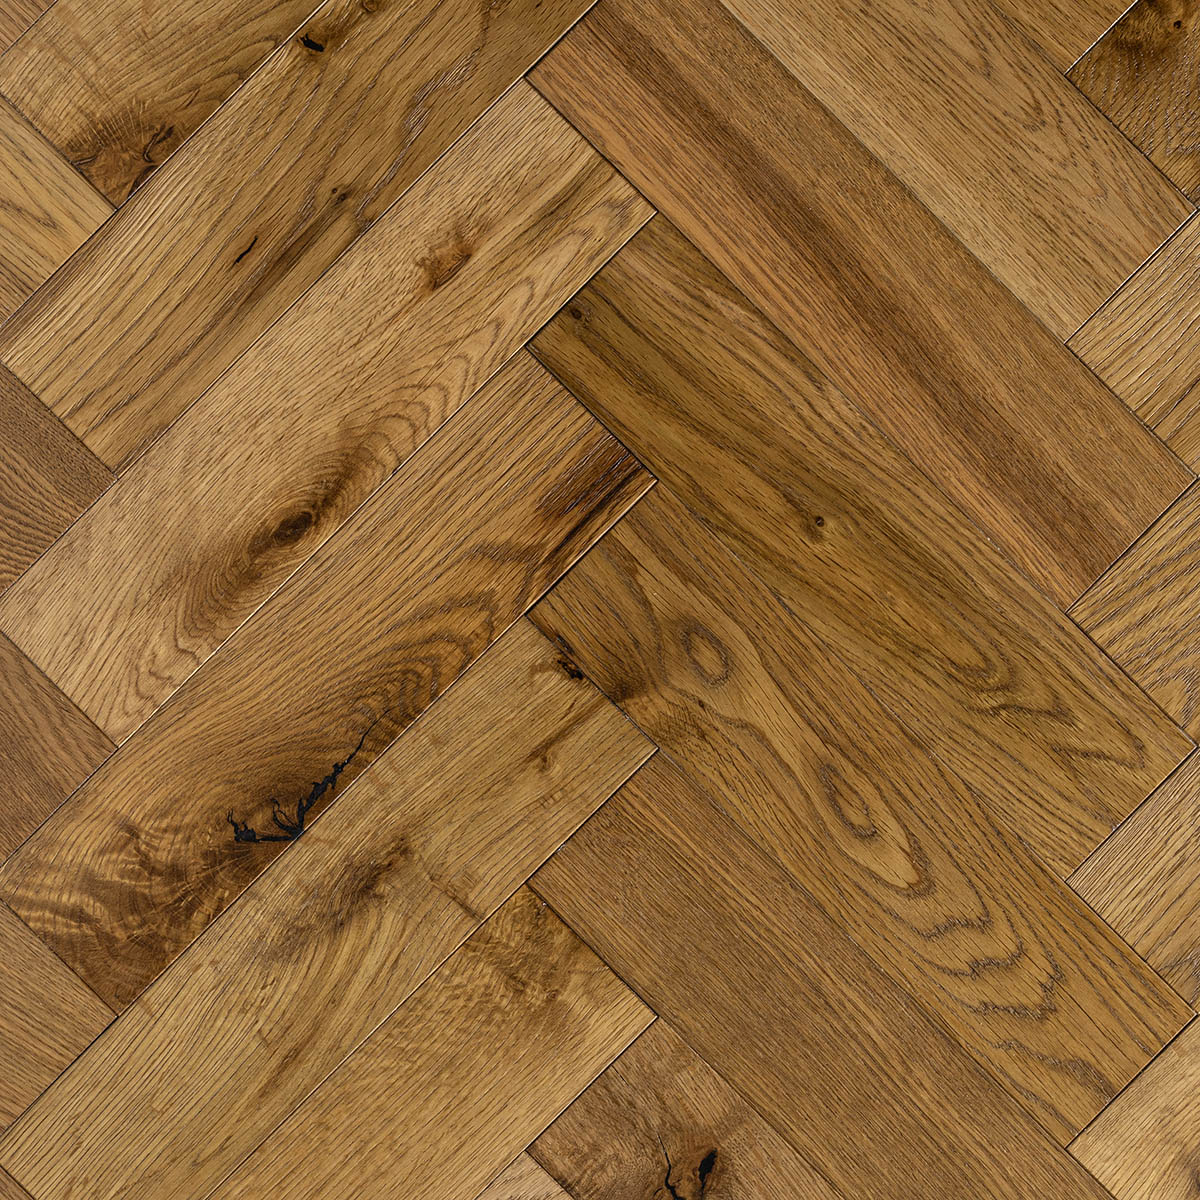 Coton Rise - Rustic-Grade Oak Herringbone Floor 280mm x 70mm